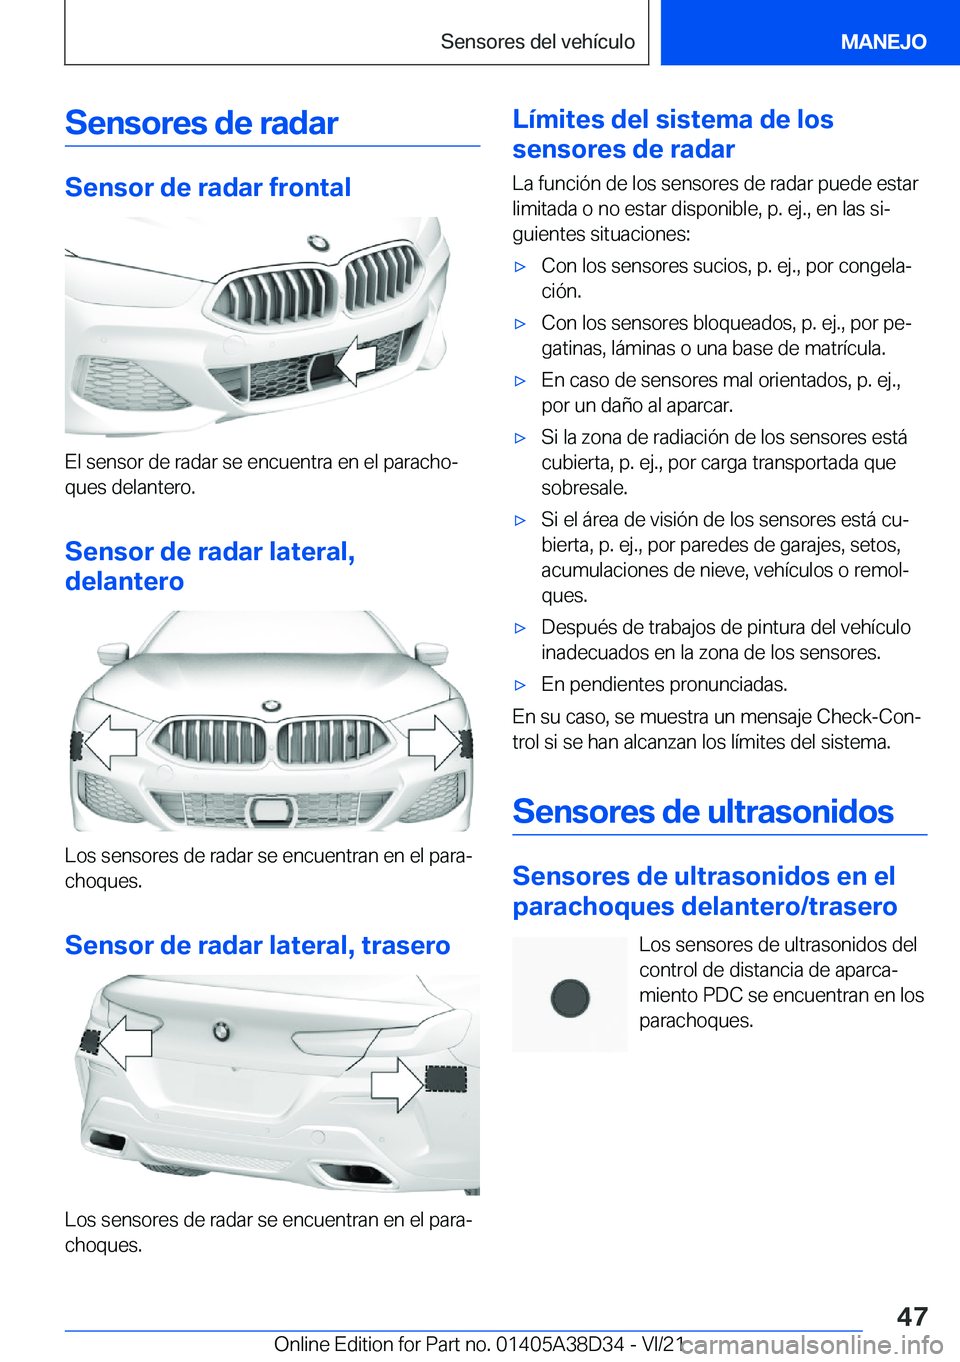 BMW 8 SERIES 2022  Manuales de Empleo (in Spanish) �S�e�n�s�o�r�e�s��d�e��r�a�d�a�r
�S�e�n�s�o�r��d�e��r�a�d�a�r��f�r�o�n�t�a�l
�E�l��s�e�n�s�o�r��d�e��r�a�d�a�r��s�e��e�n�c�u�e�n�t�r�a��e�n��e�l��p�a�r�a�c�h�oª
�q�u�e�s��d�e�l�a�n�t�e